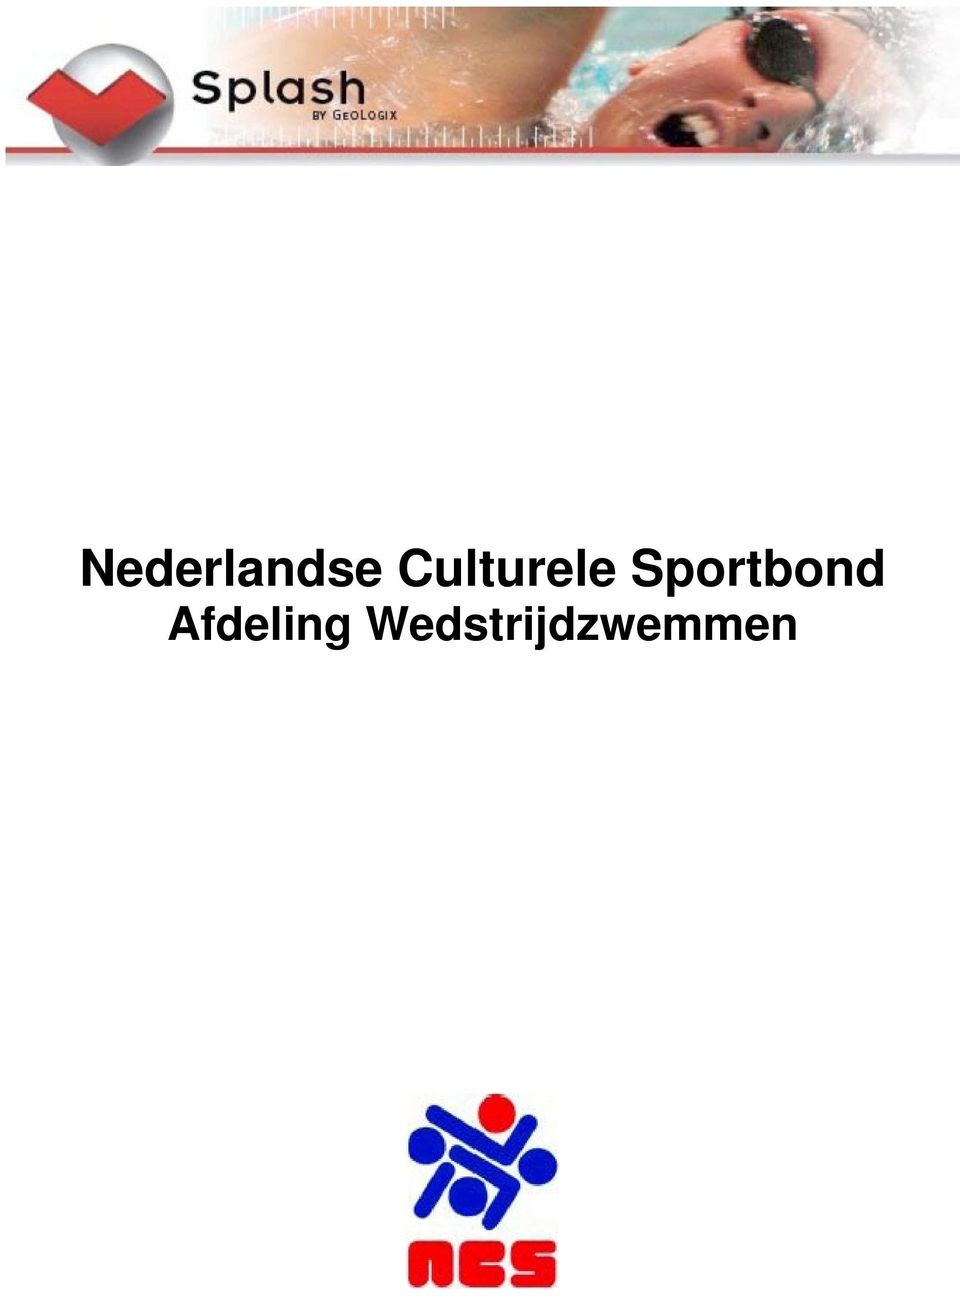 Sportbond